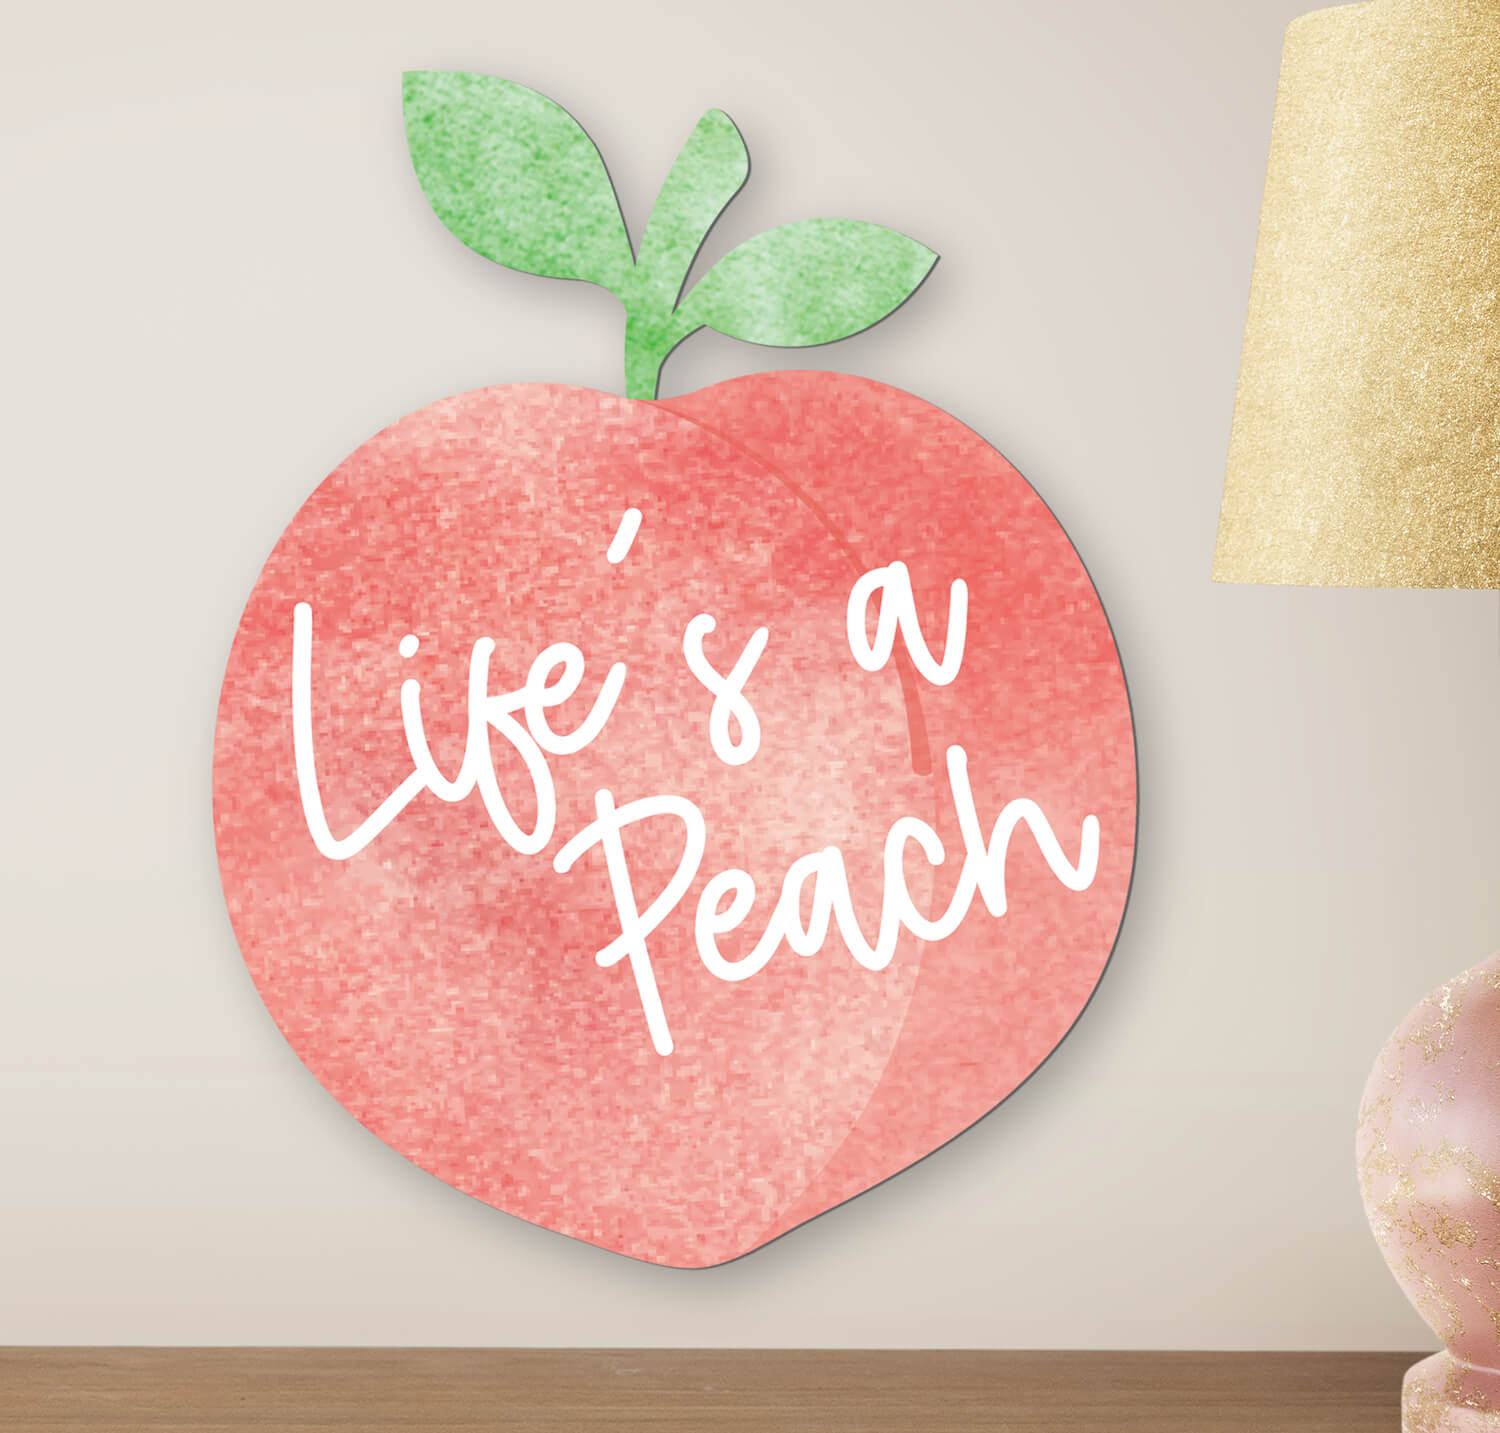 peach shaped wall decor customized with life's a peach